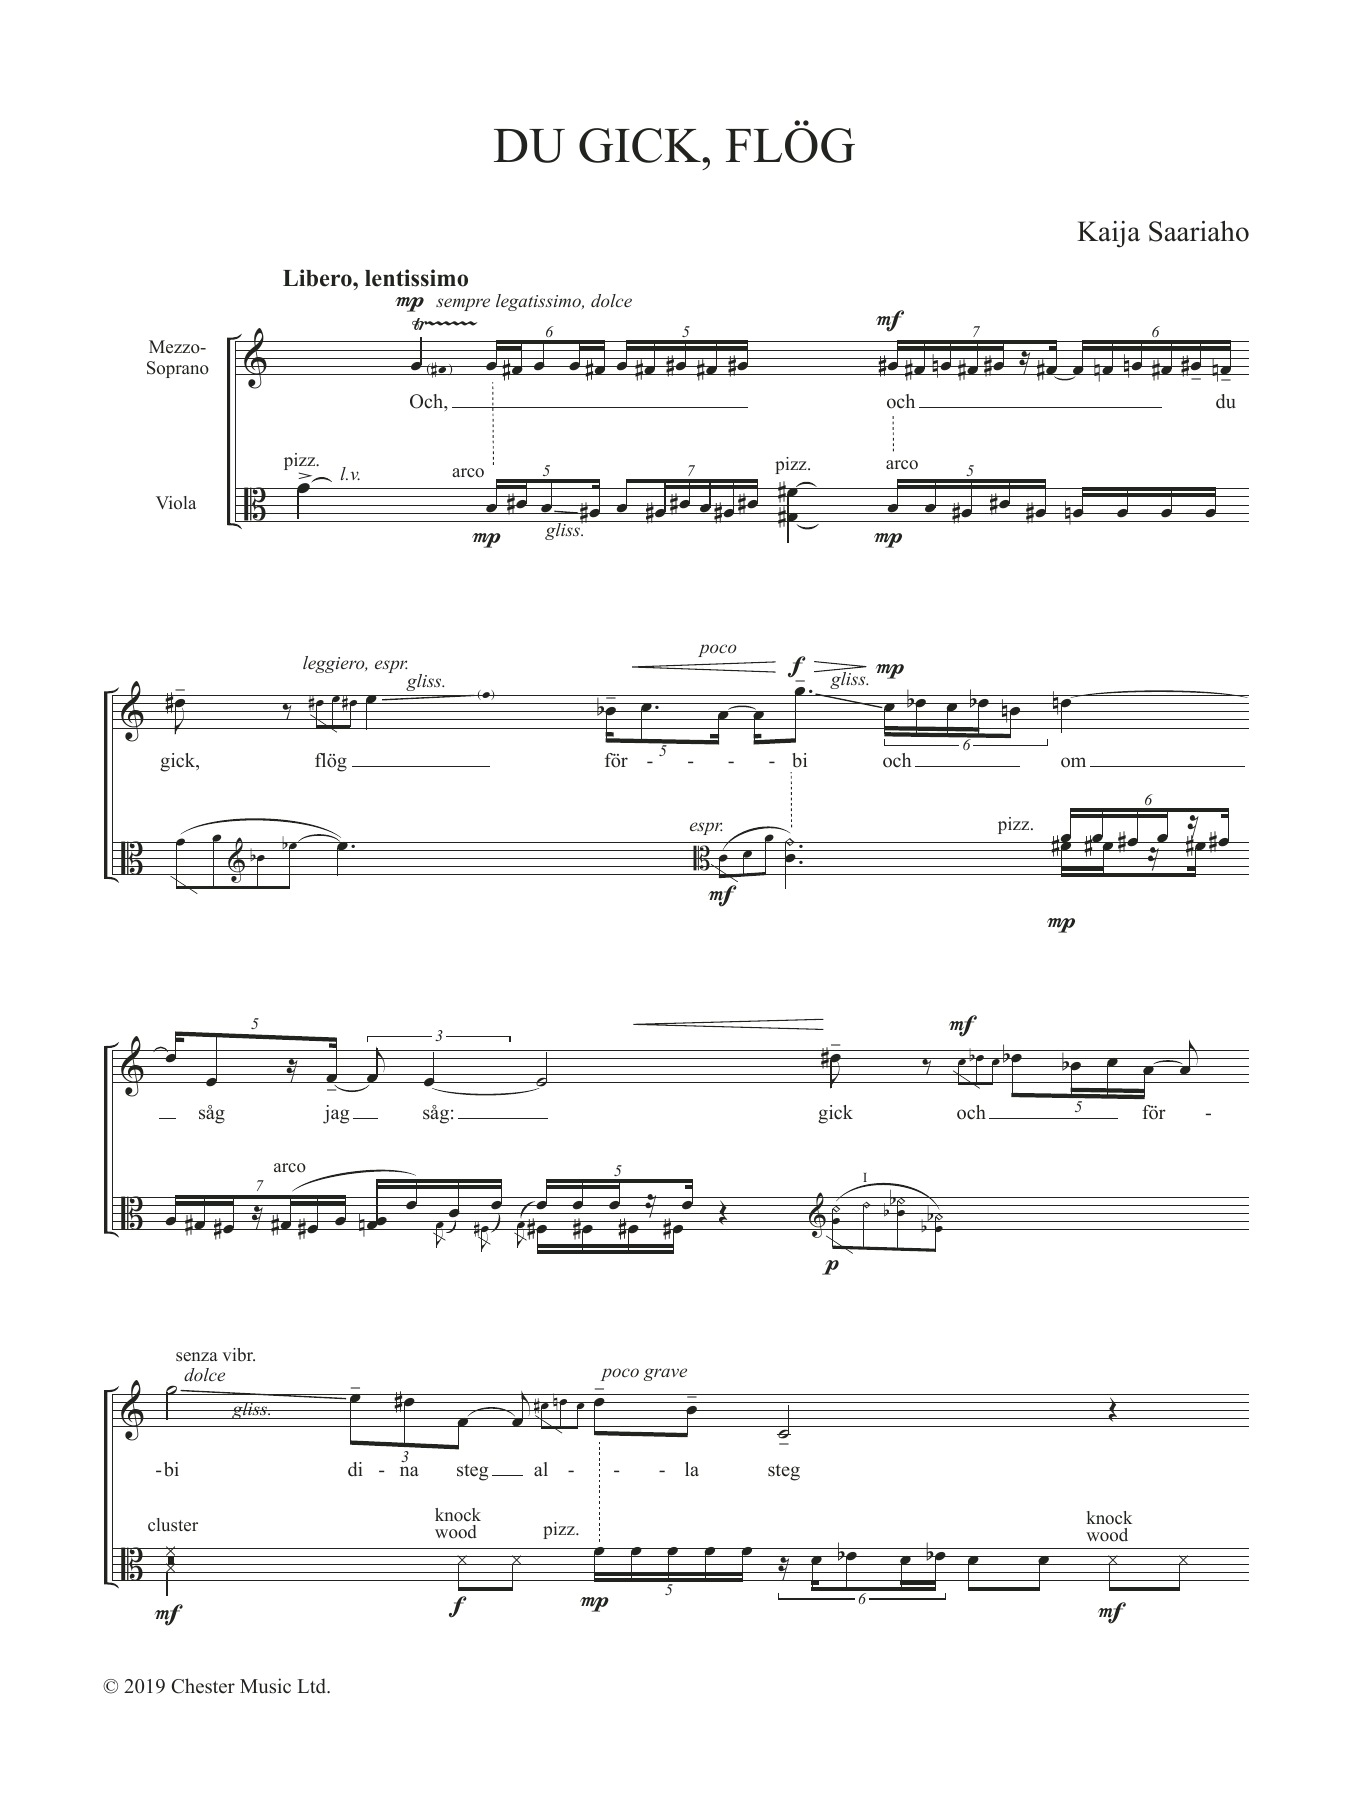 Kaija Saariaho Du gick, flög sheet music notes printable PDF score